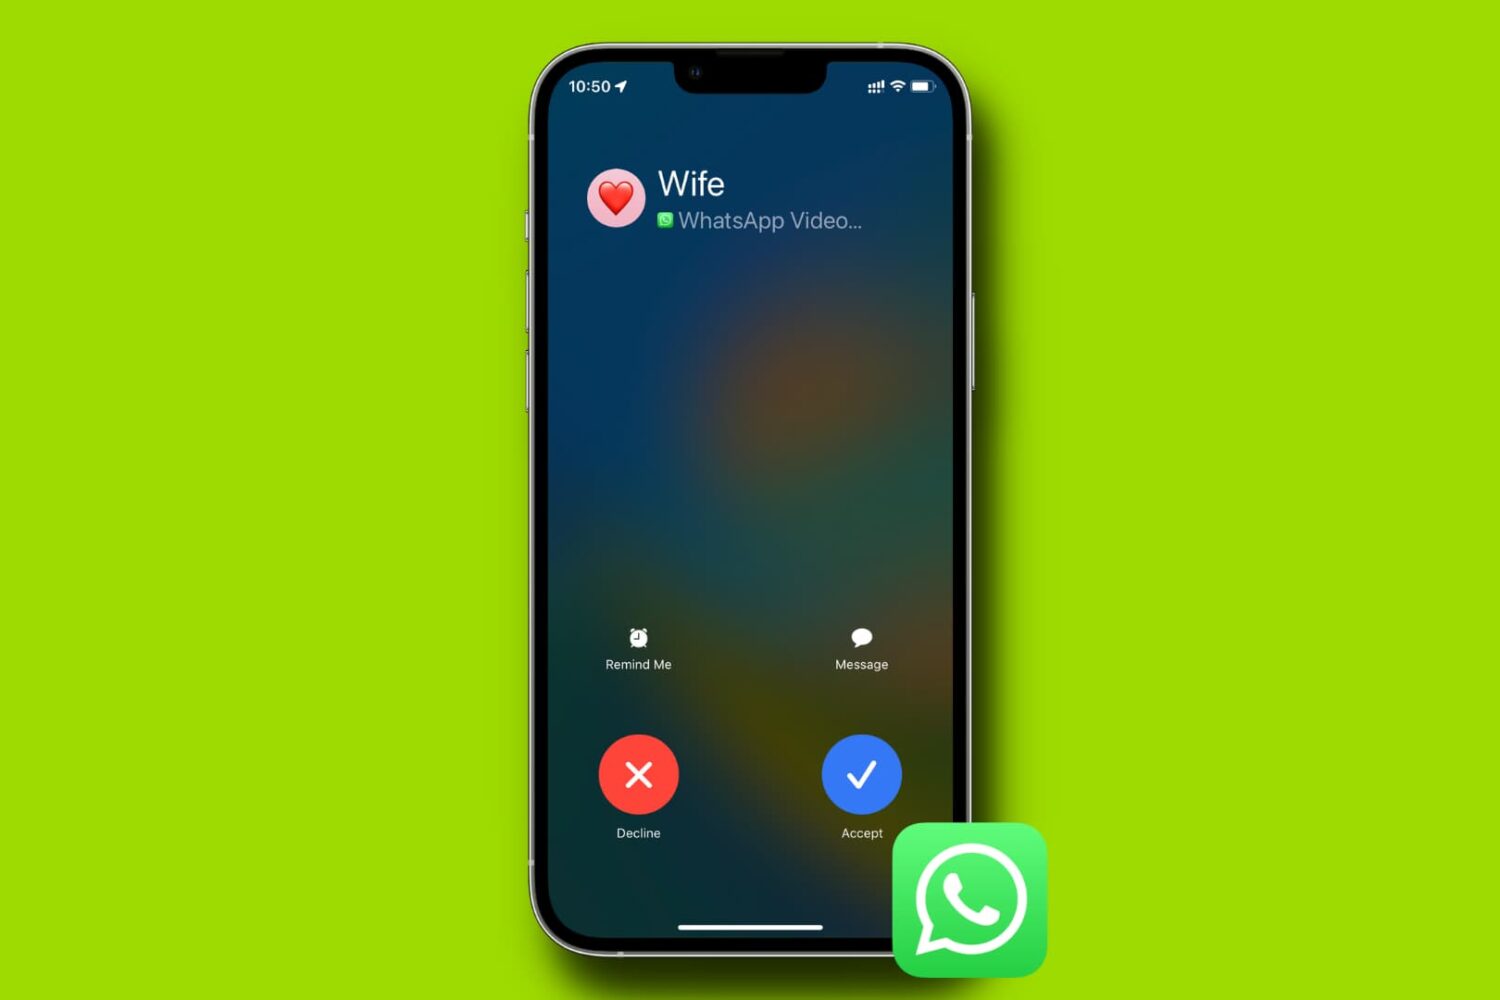 Getting a WhatsApp video call on iPhone